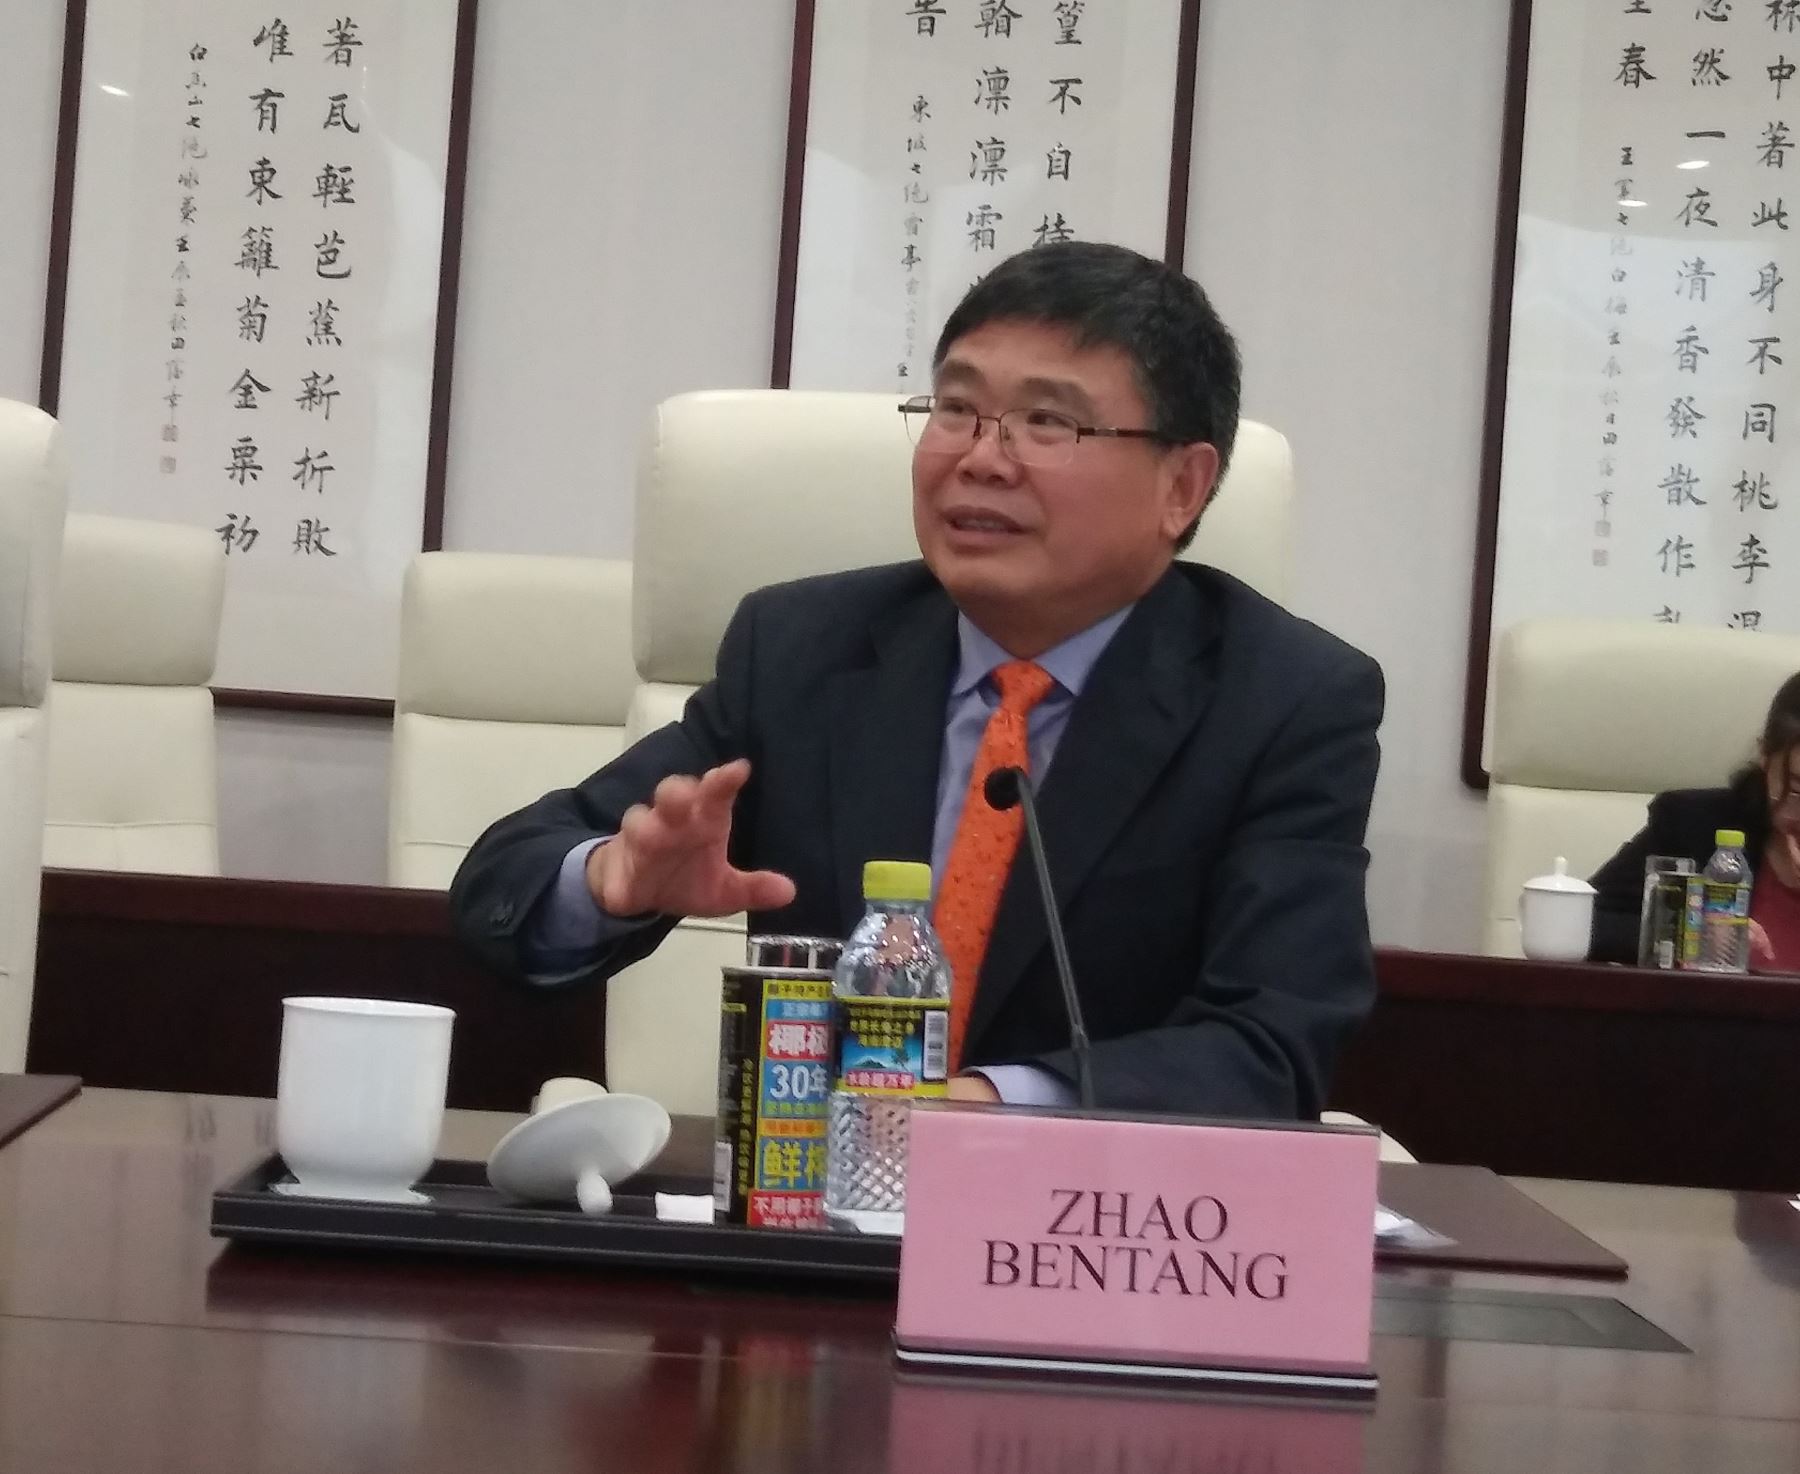 Funcionario del Ministerio de Relaciones Exteriores de China, Zhao Bentang.